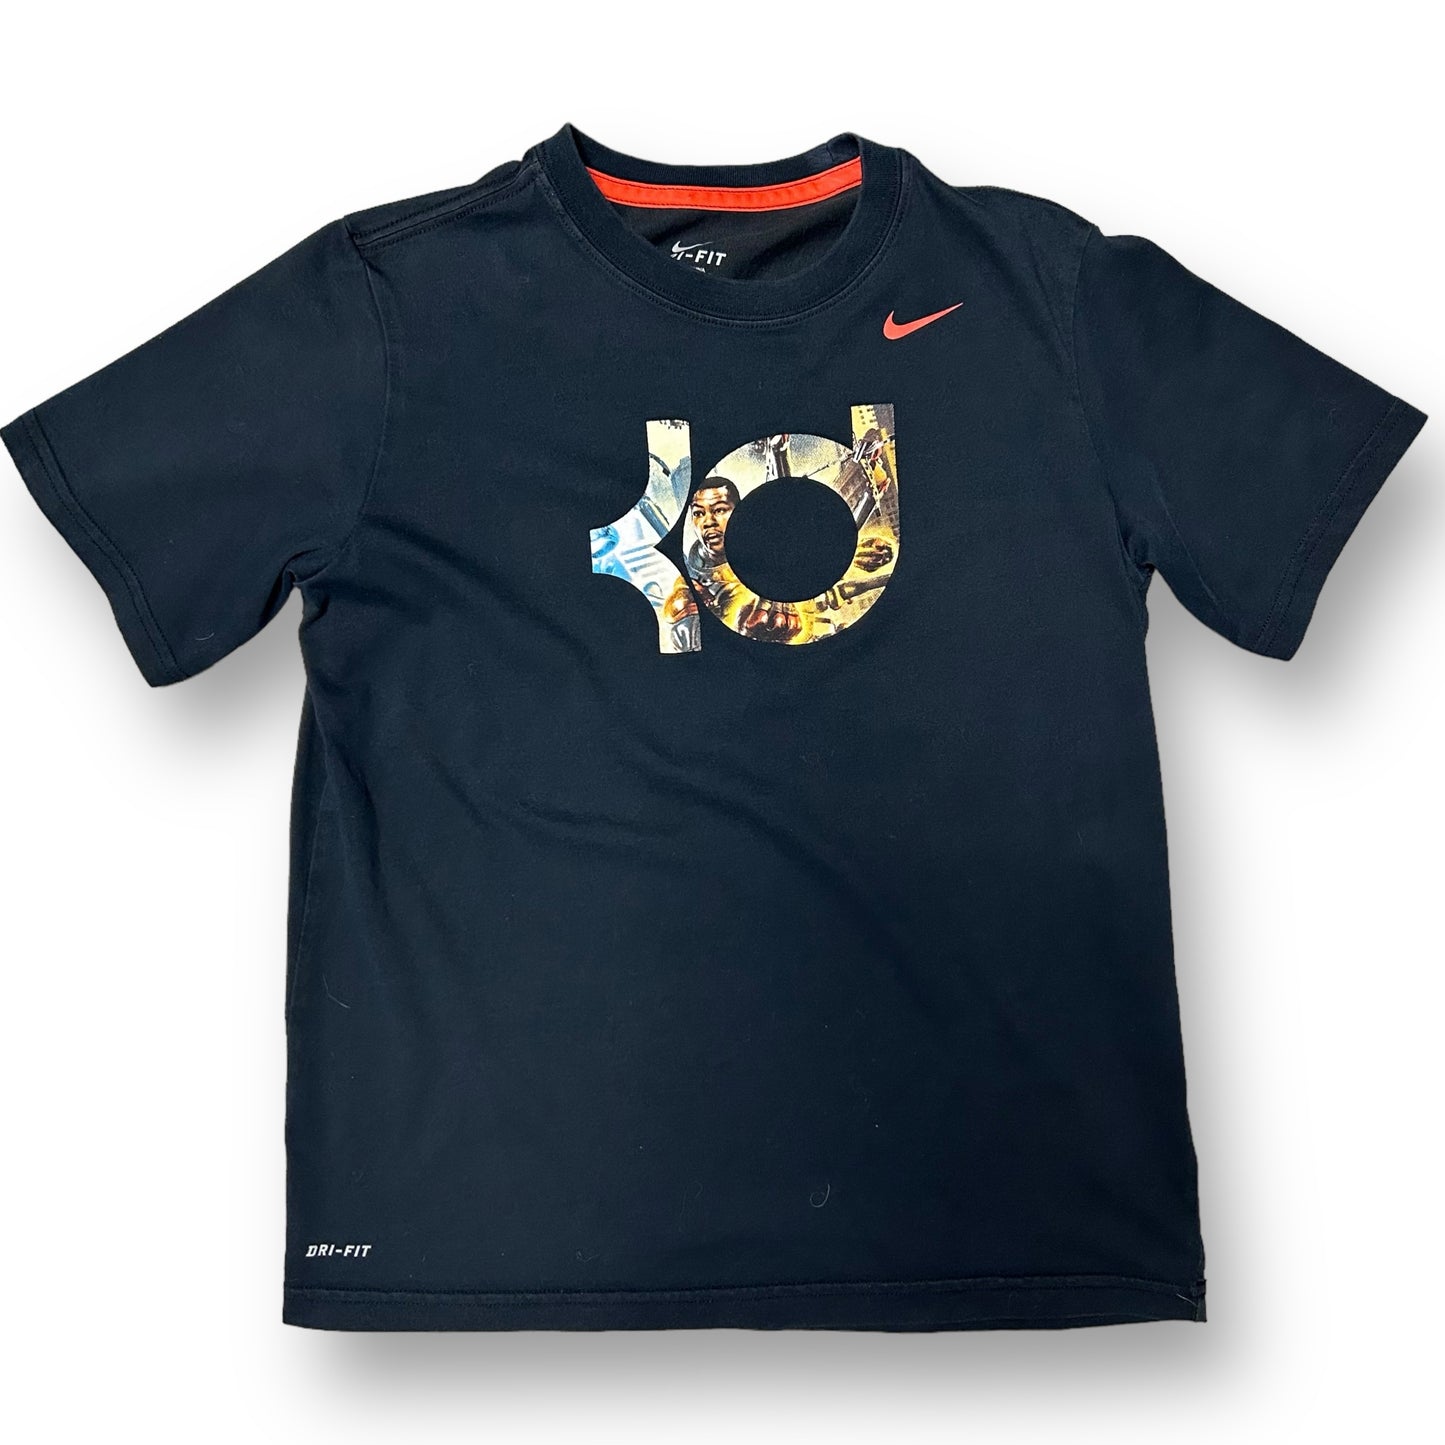 Boys Nike KD Size 10/12 Black Kevin Durant Graphic Short Sleeve Shirt